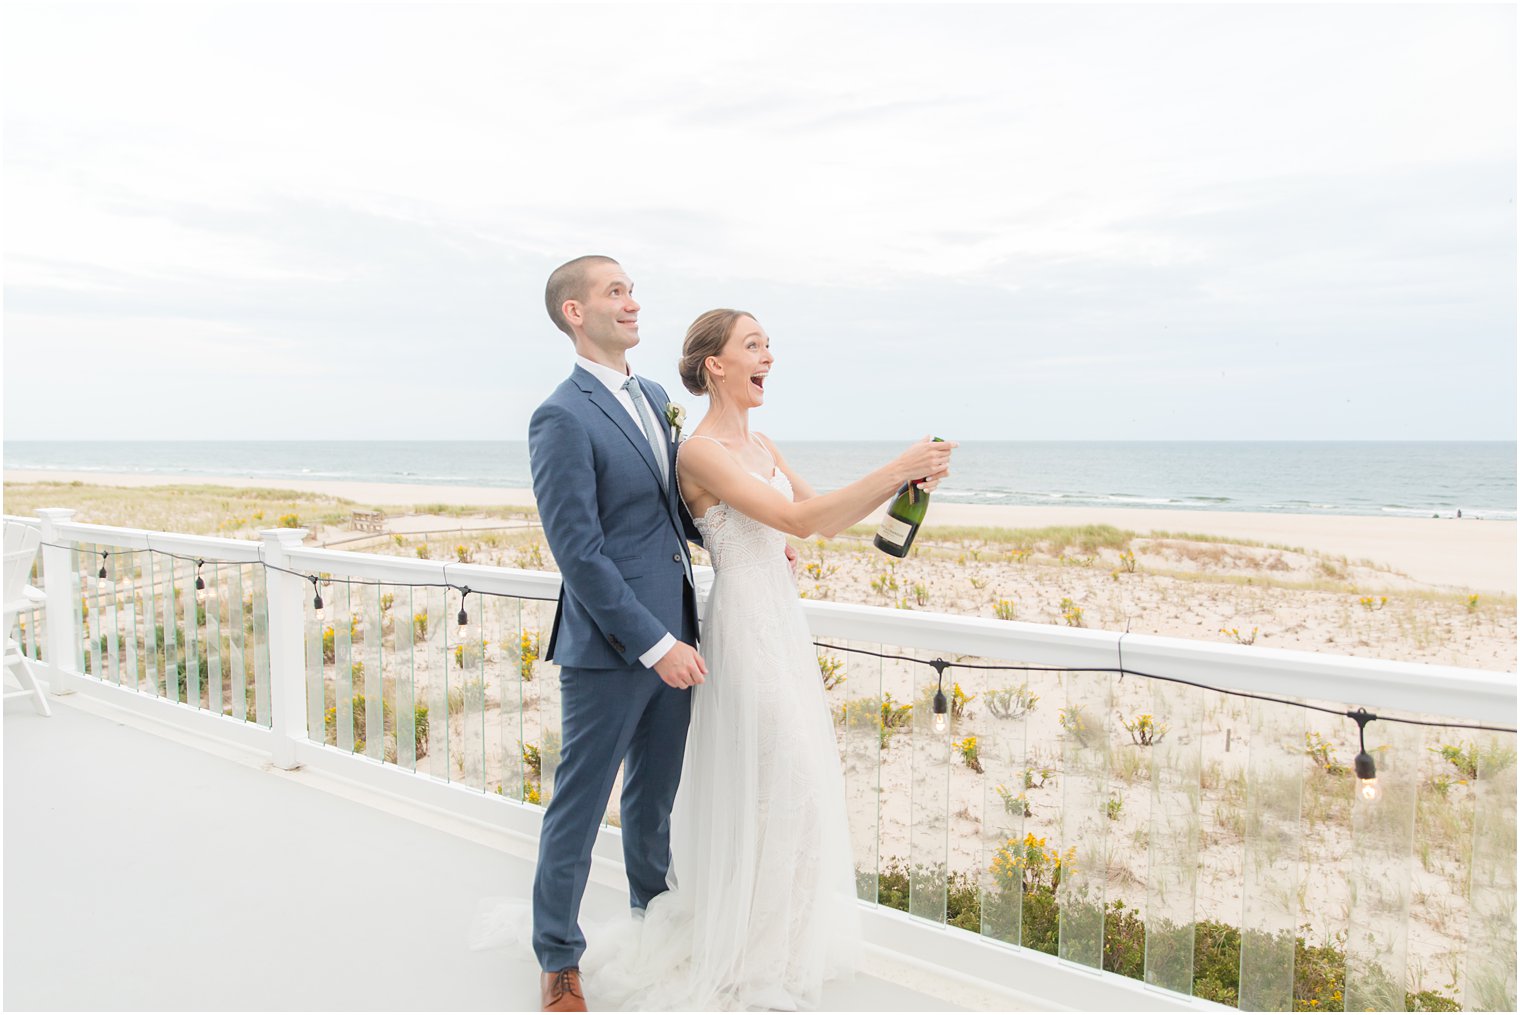 newlyweds pop champagne overlooking beach